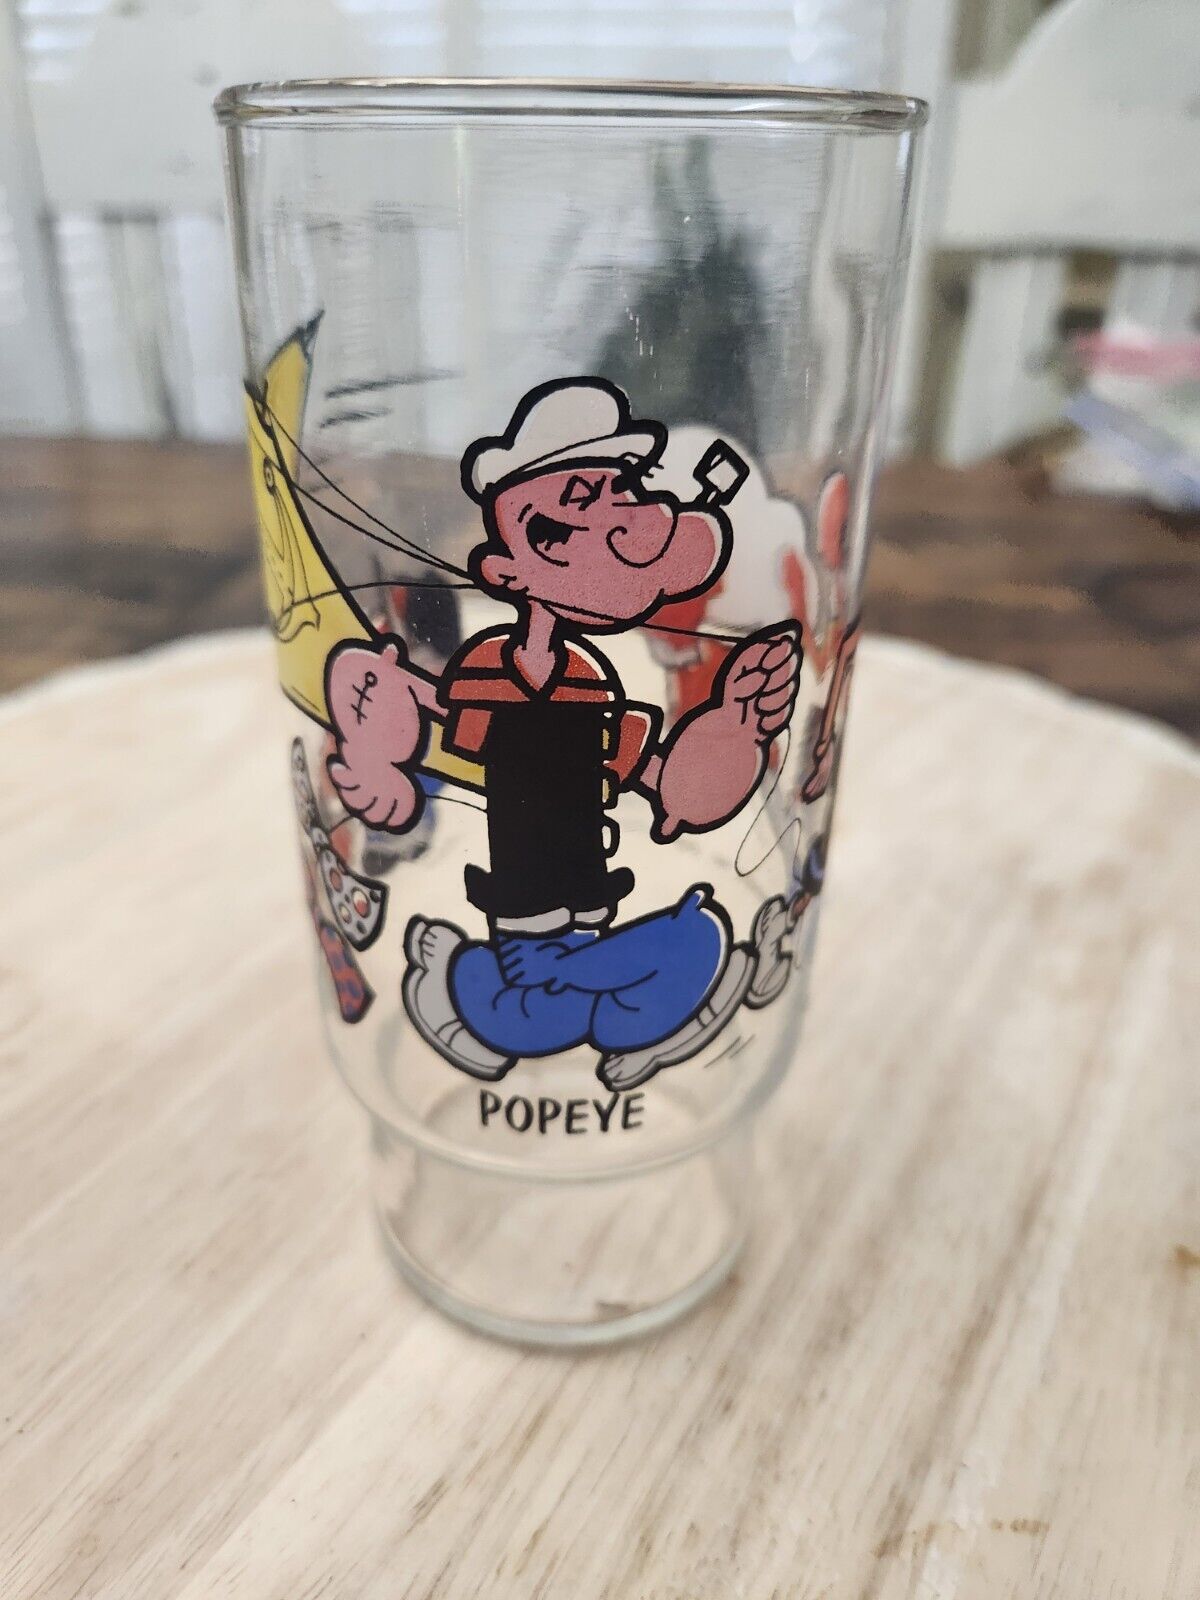 1978 Vintage Popeye Advertising Glass